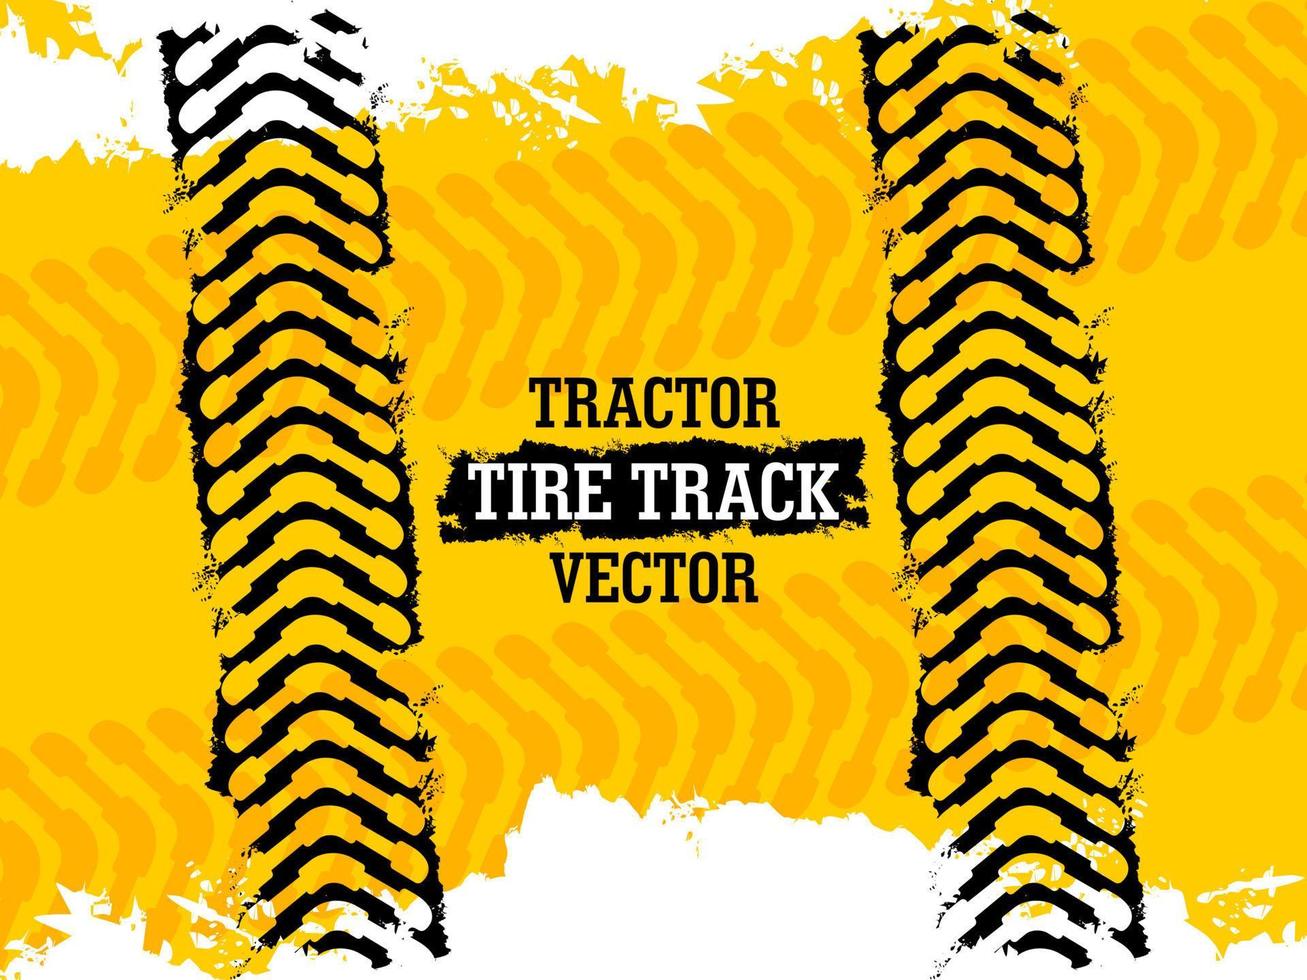 tractorband print mark achtergrond met grunge vector